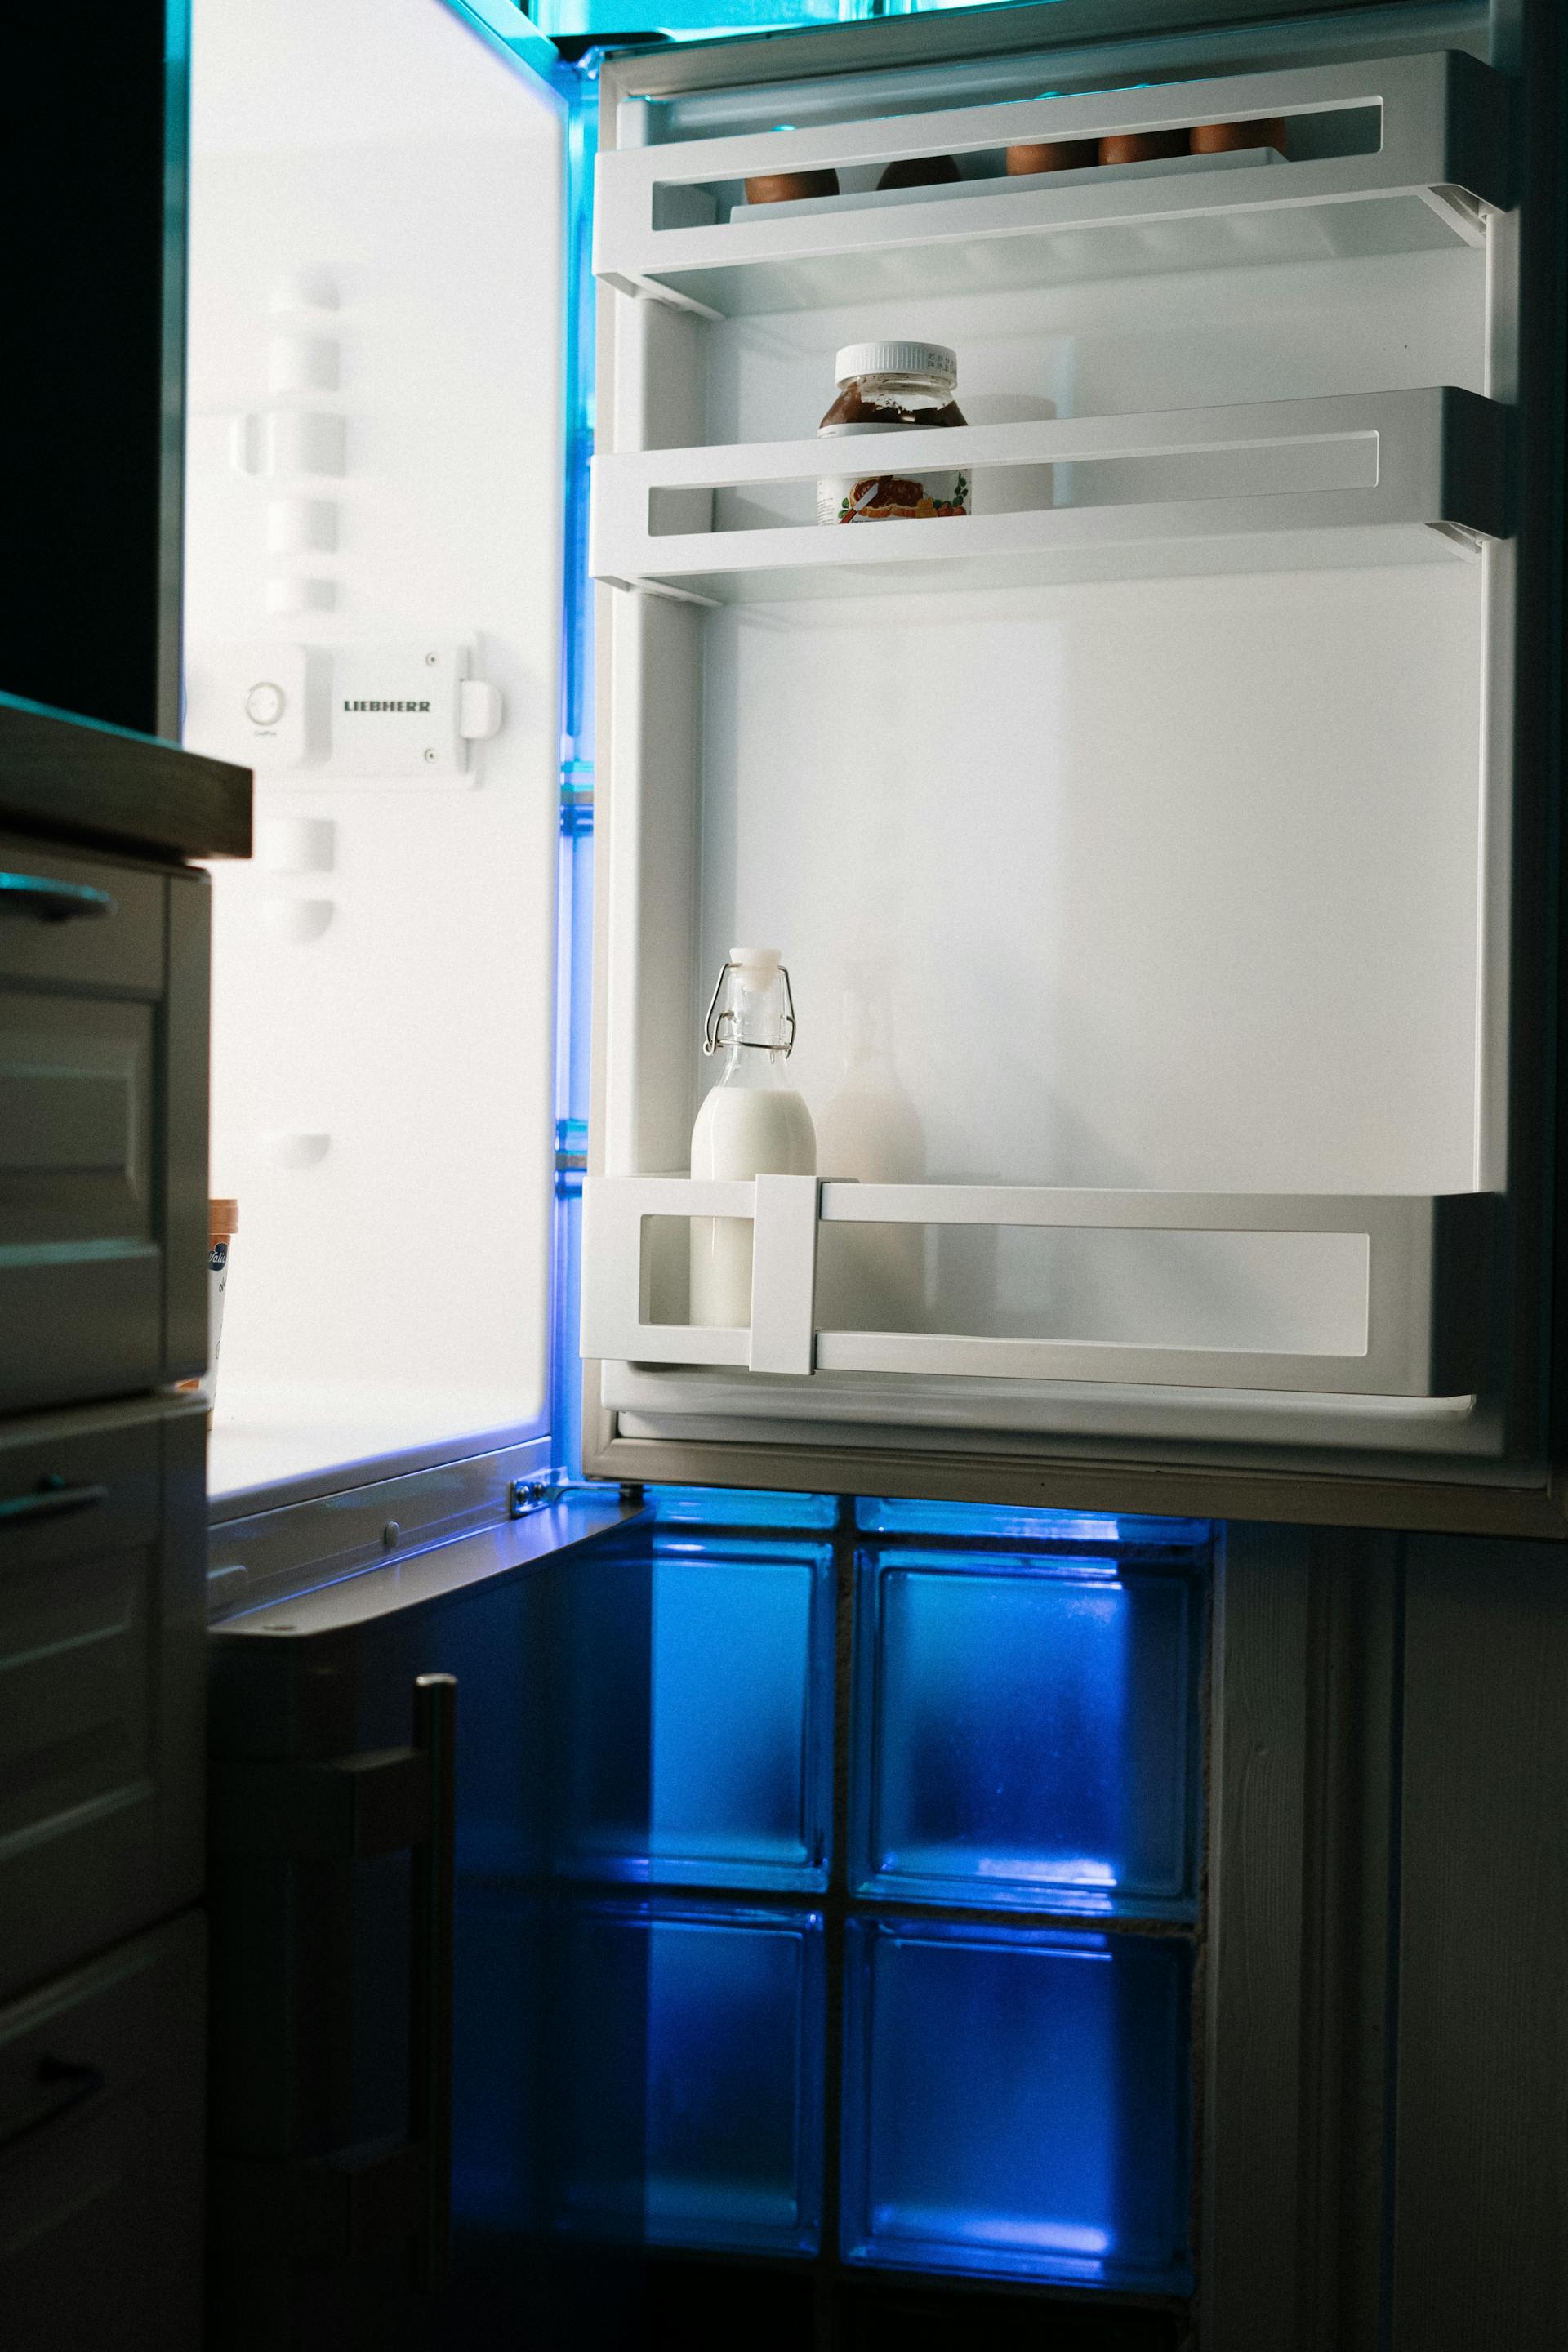 A nearly empty fridge | Source: Pexels